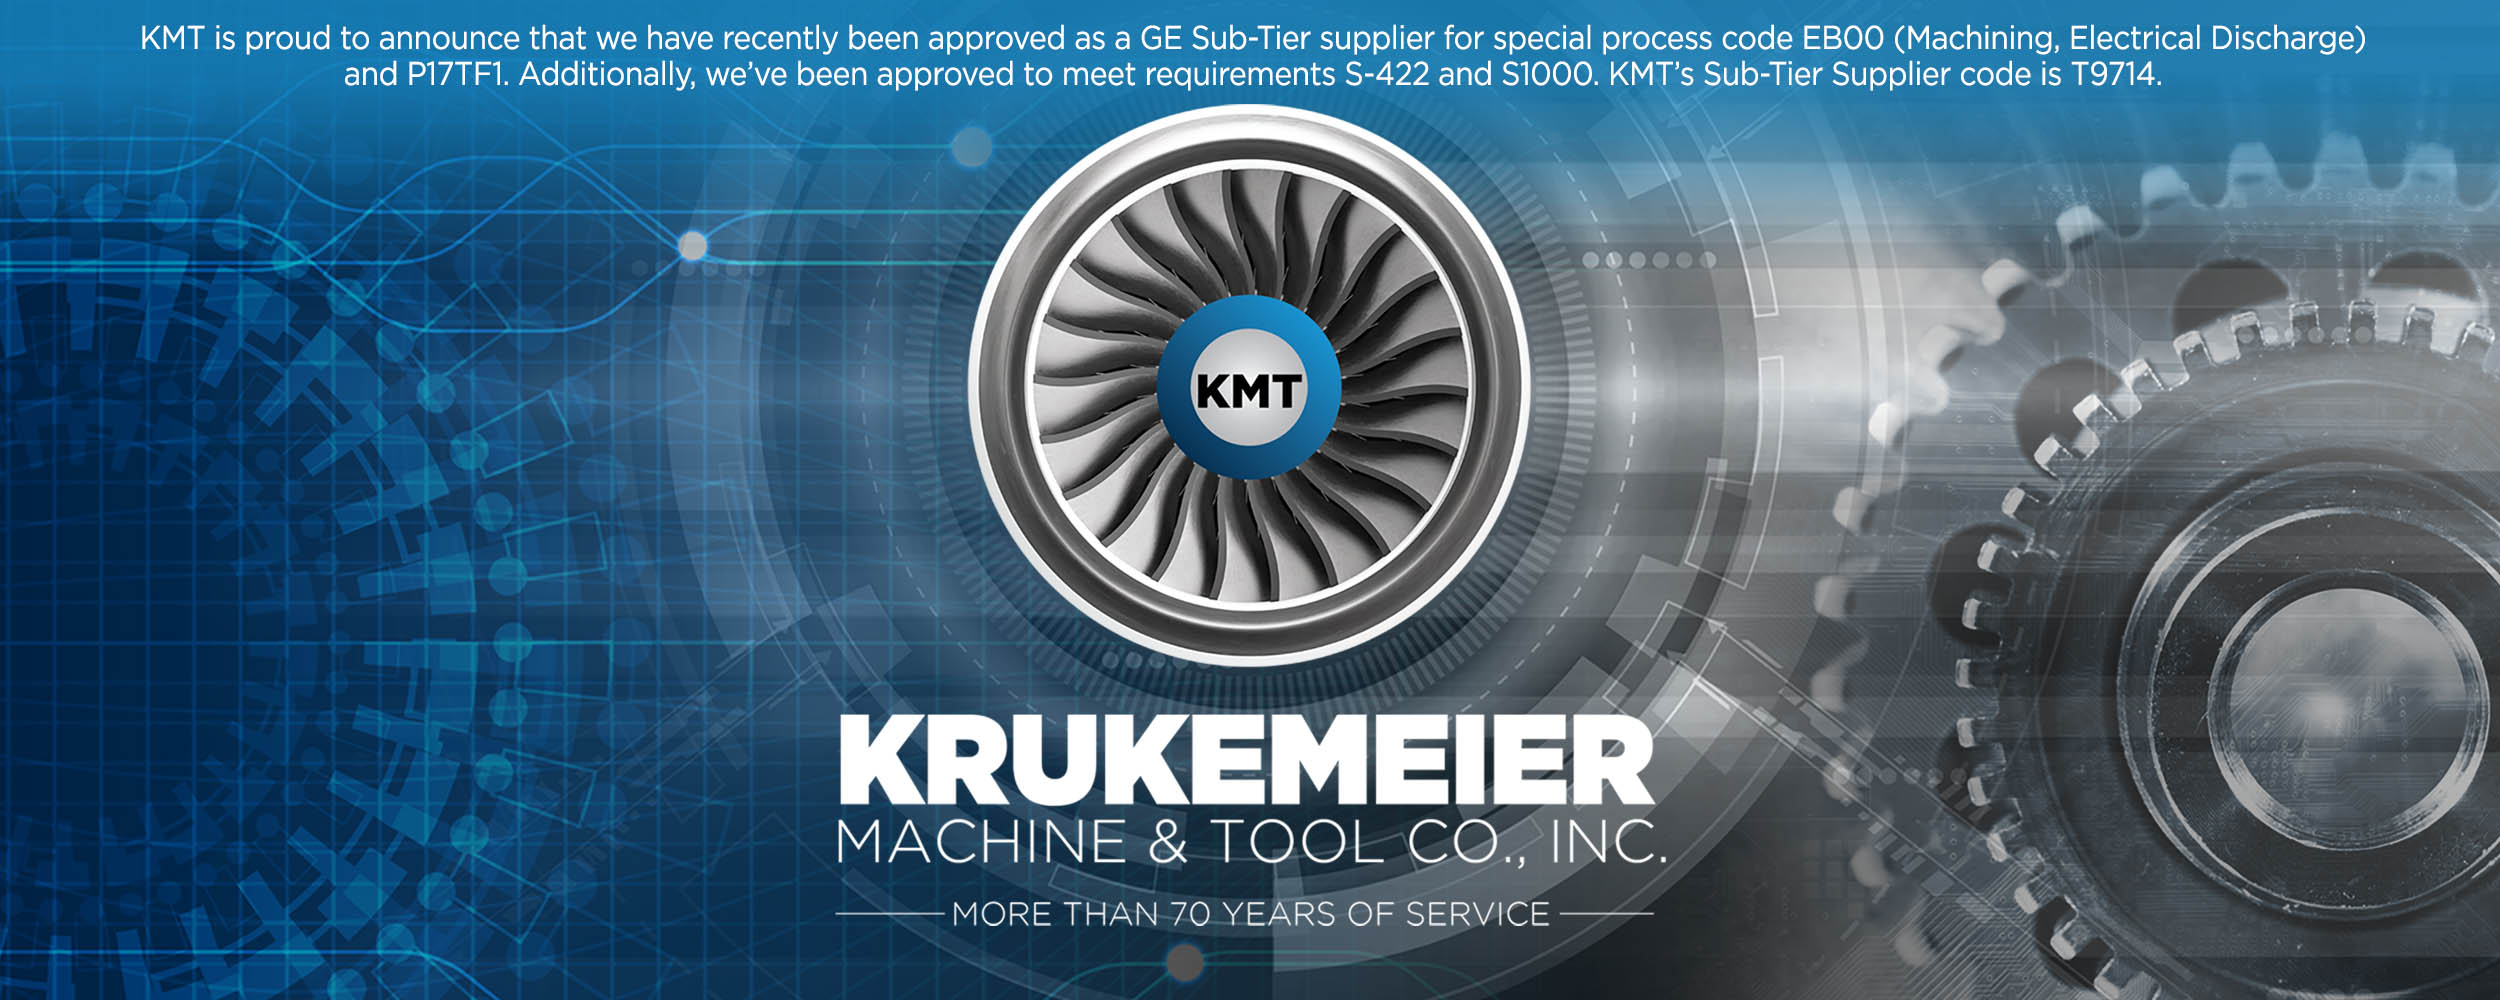 Krukemeier Machine & Tool, Inc. (KMT)